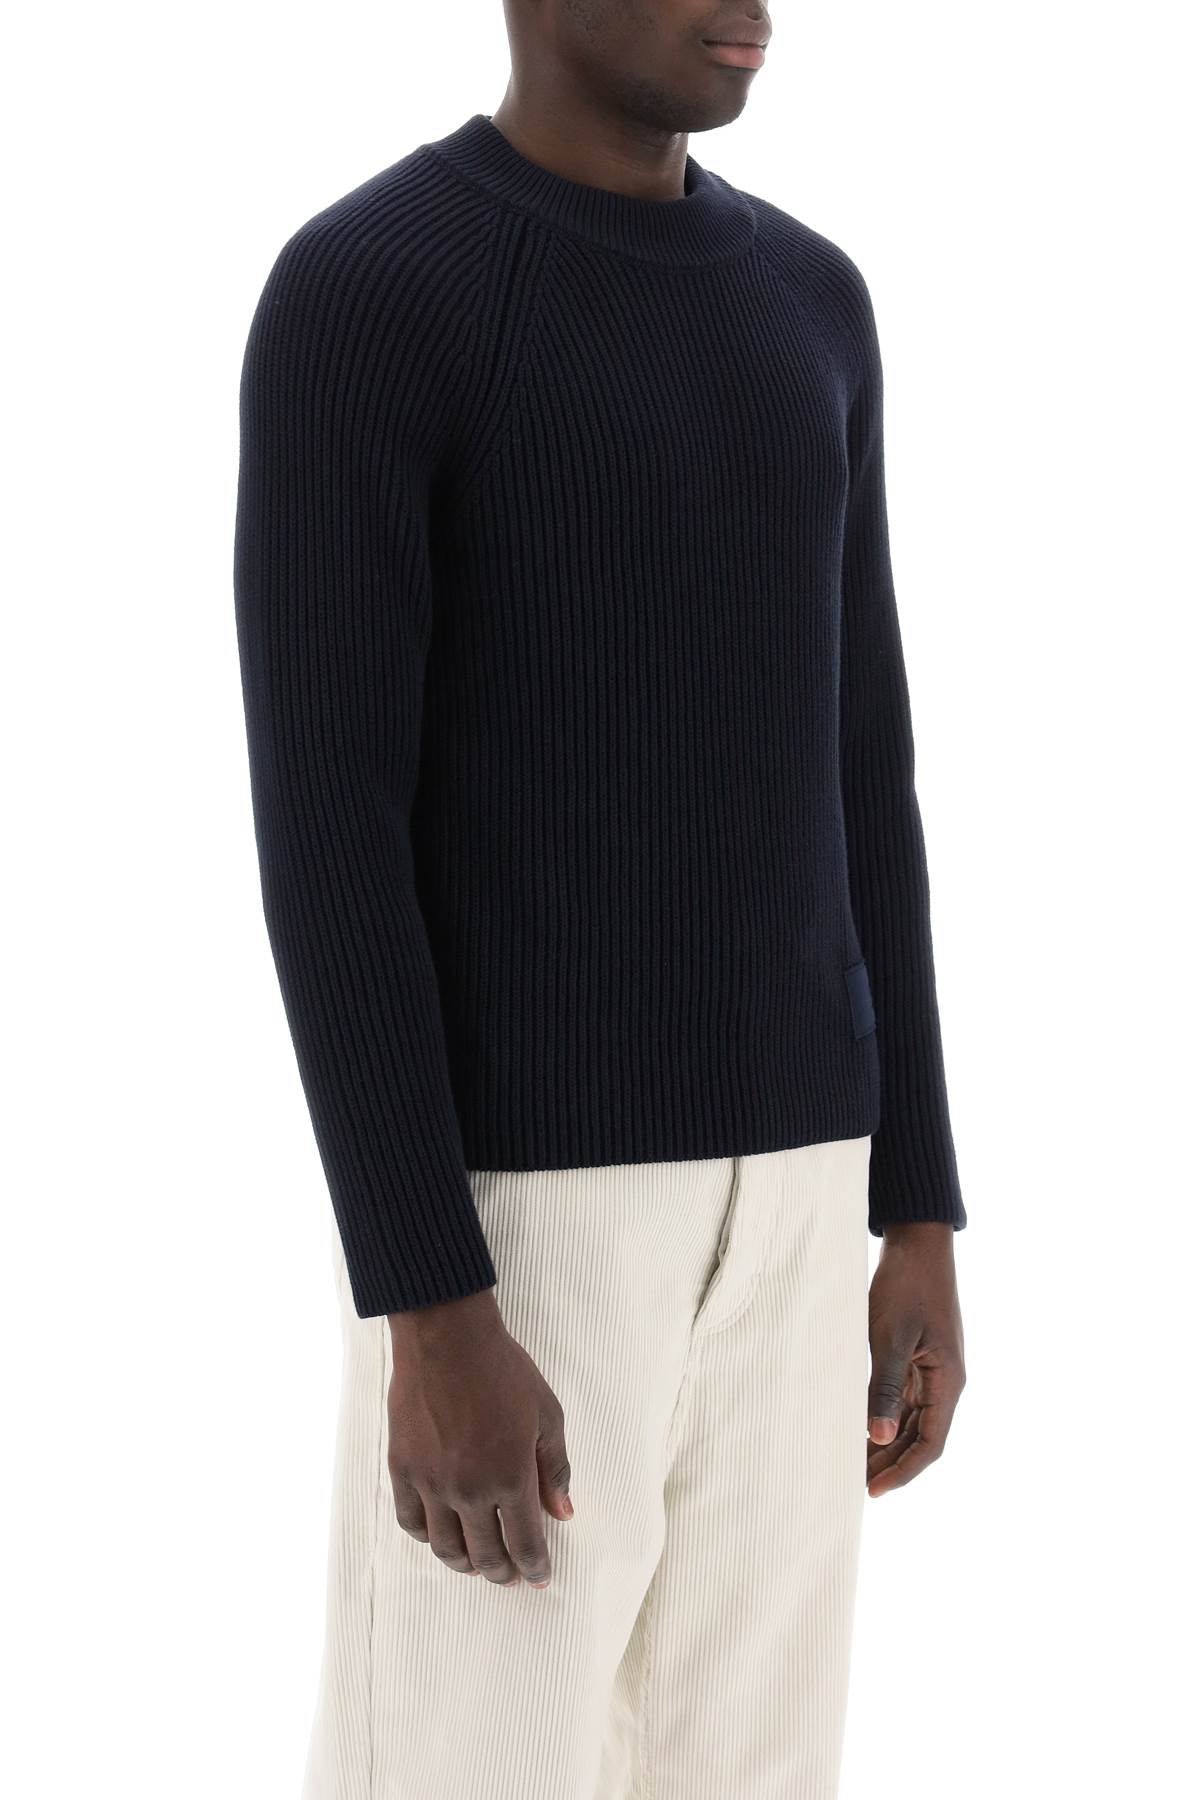 Ami Alexandre Matiussi Cotton-Wool Crewneck Sweater (Size - M)